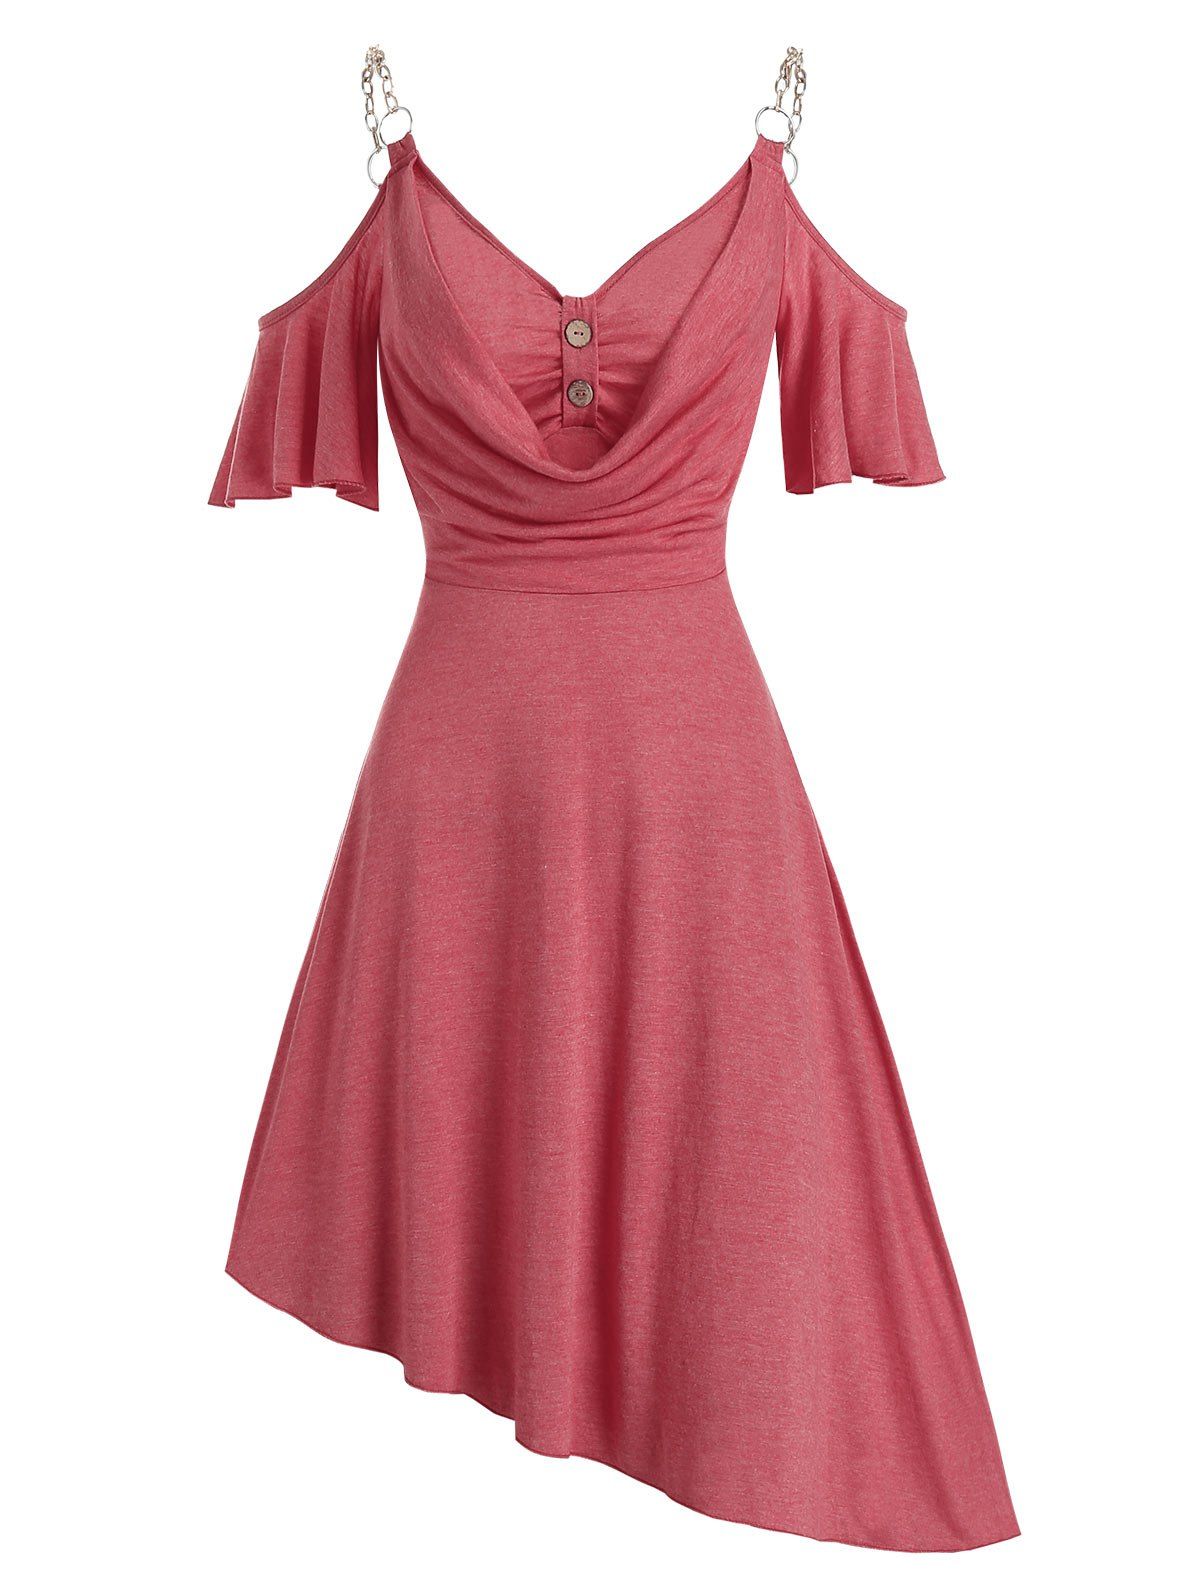 Chain Strap Cold Shoulder Draped Asymmetric Dress - RED XL